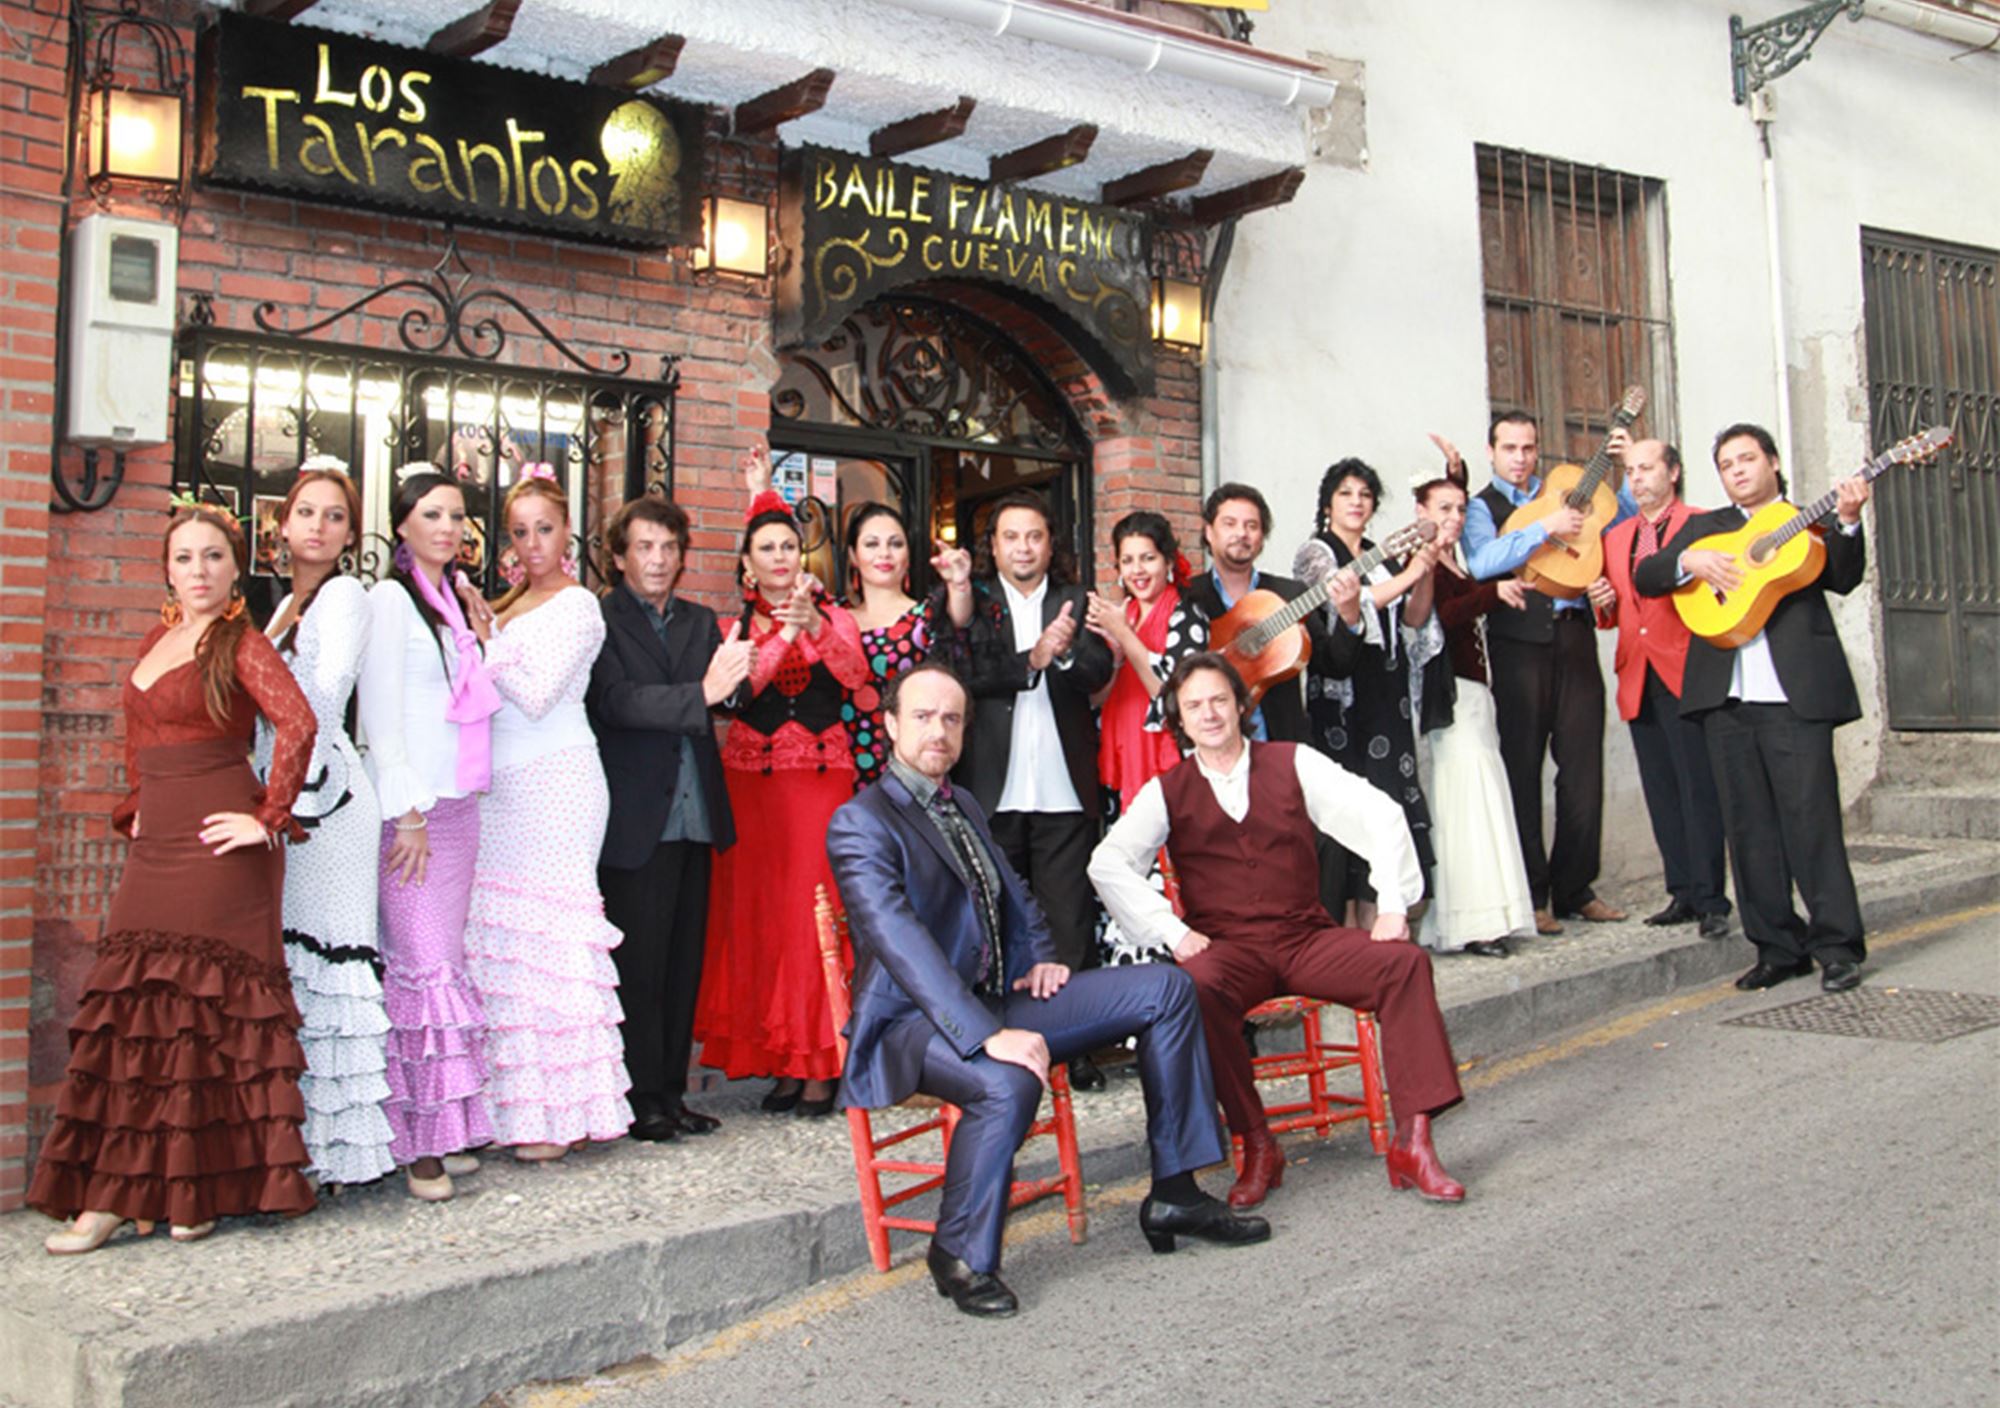 réservations visites tours Zambra flamenco spectacle tablao grotte Los Tarantos billets visiter granada